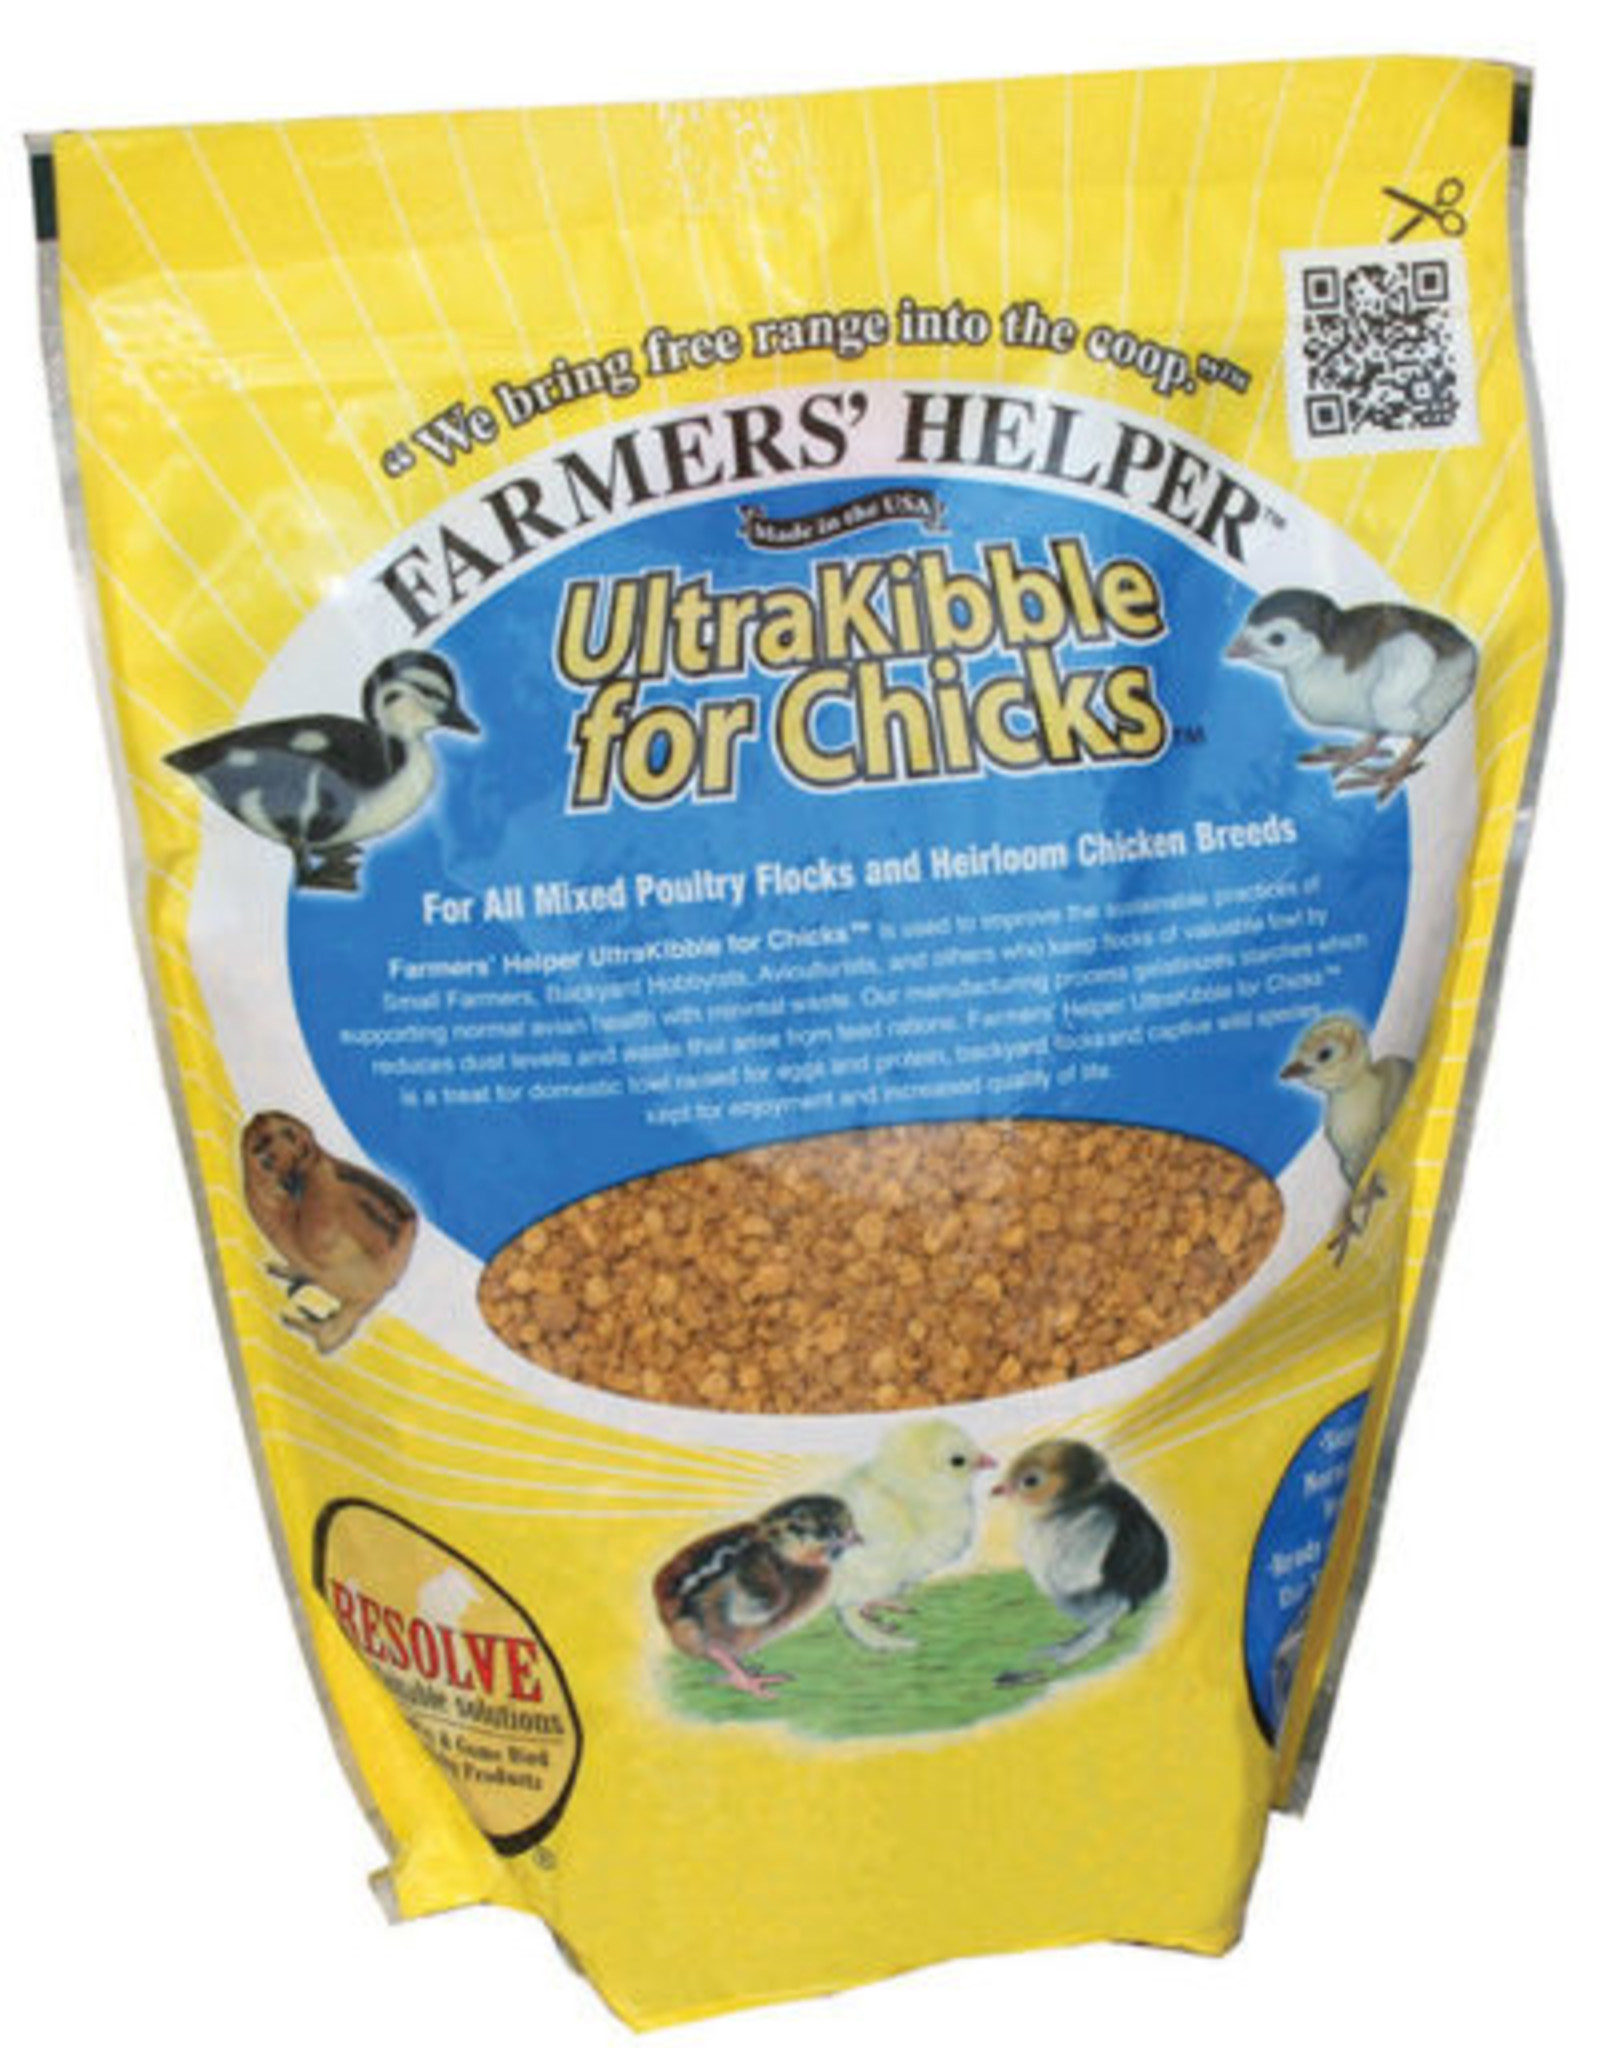 C & S PRODUCTS CO INC FARMERS' HELPER ULTRAKIBBLE FOR CHICKS 36OZ